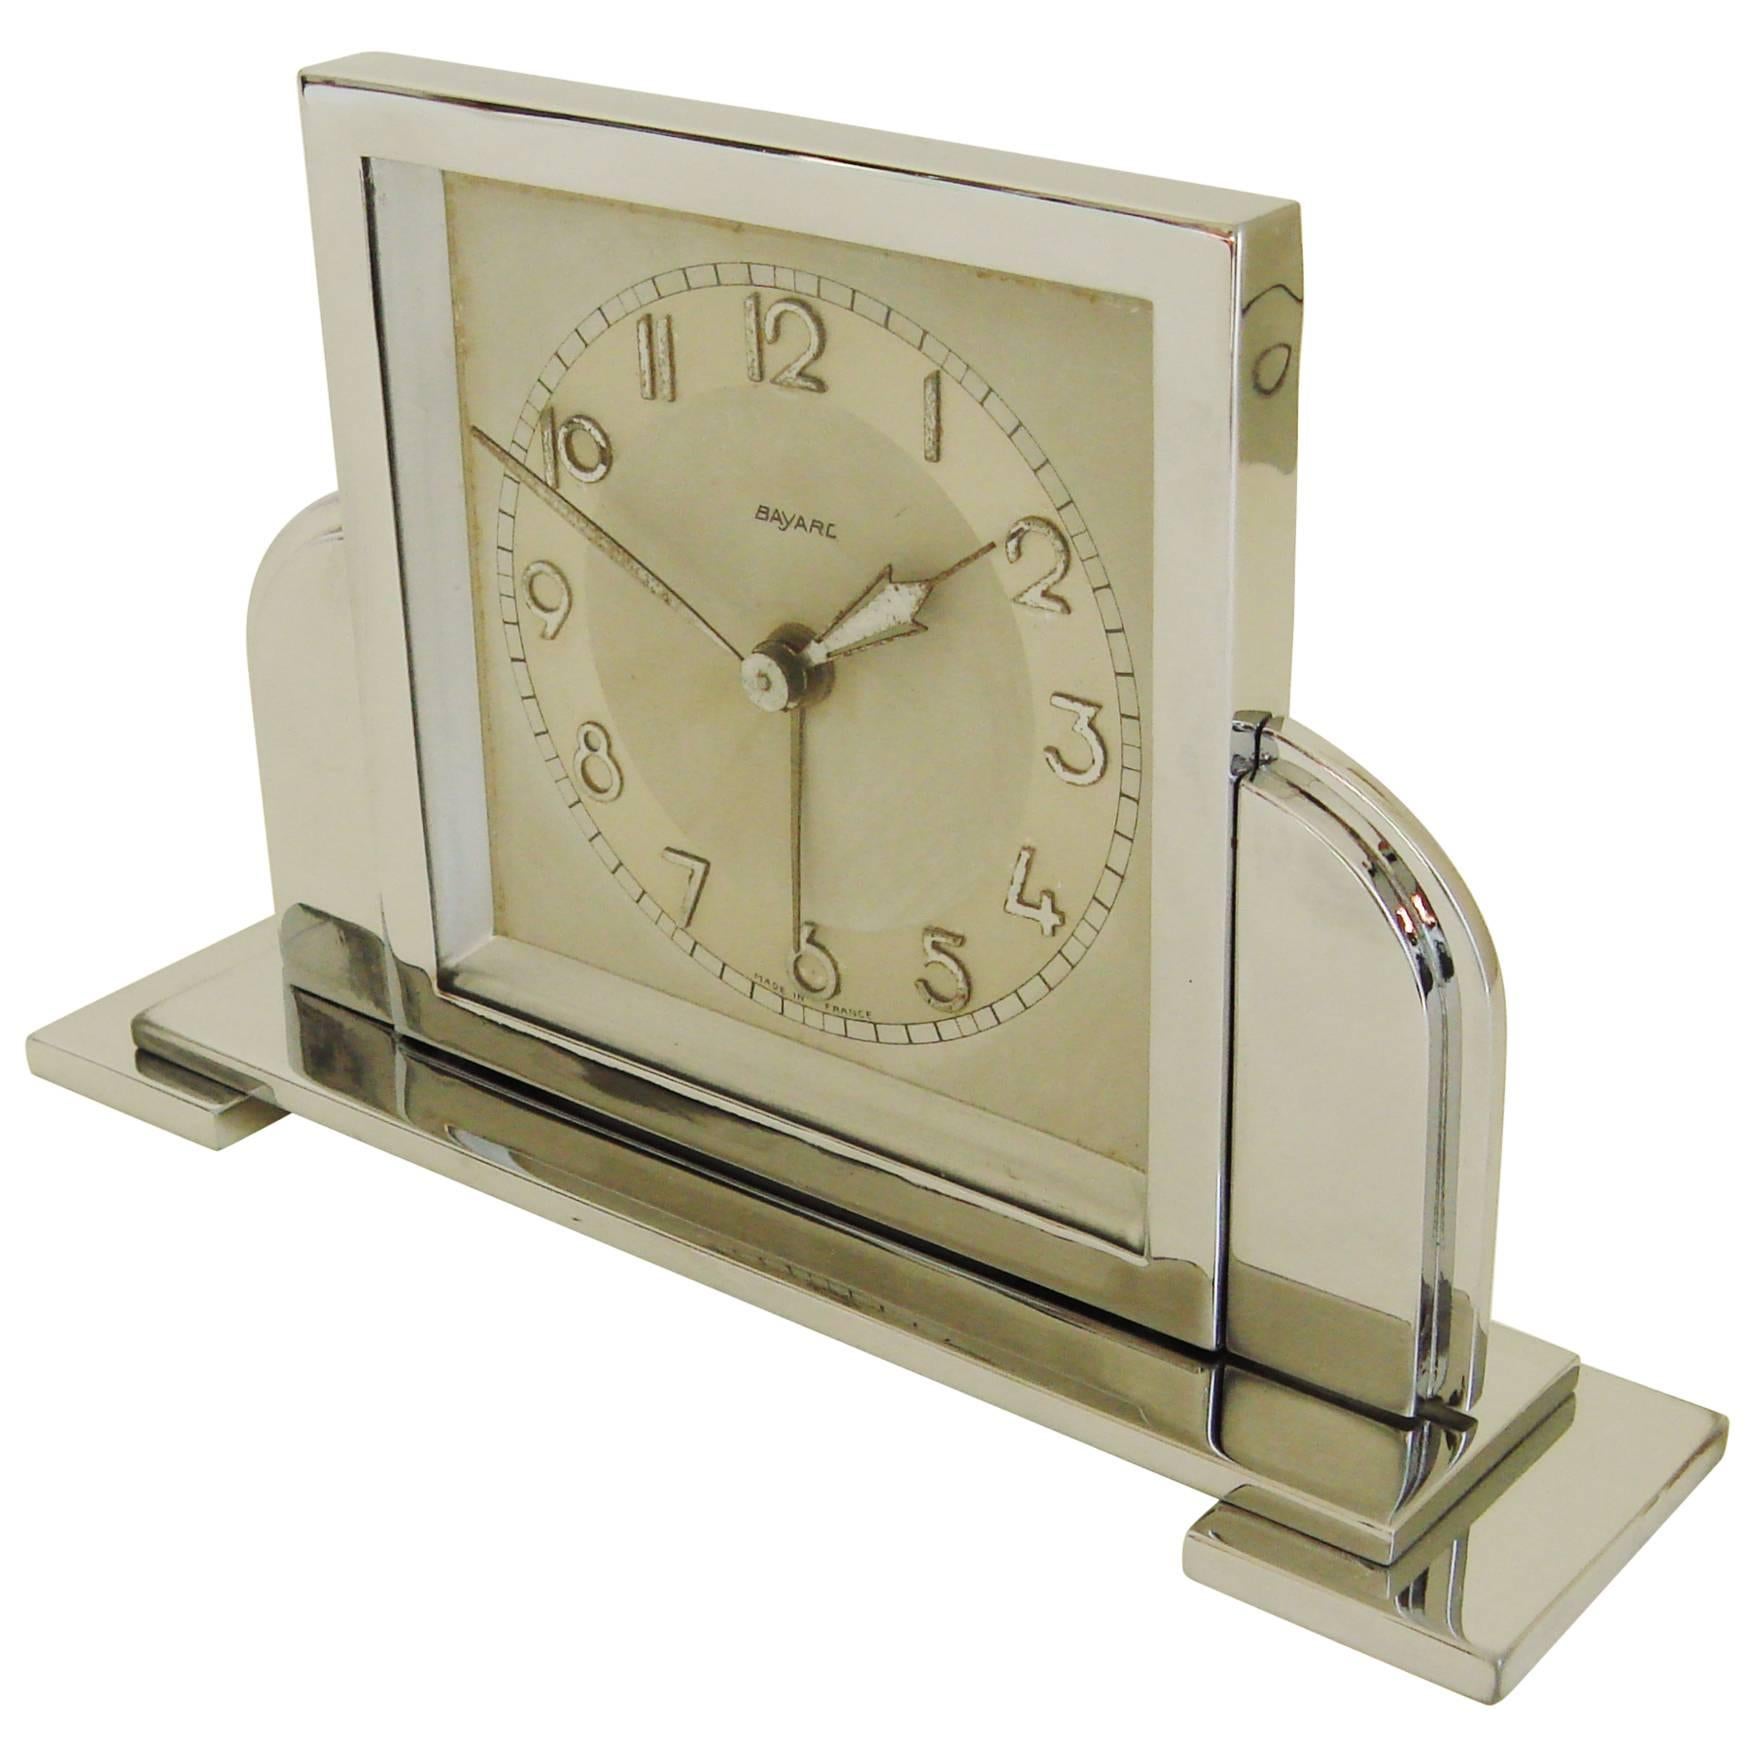 French Art Deco Chrome Mechanical Architectural Alarm Clock by Bayard